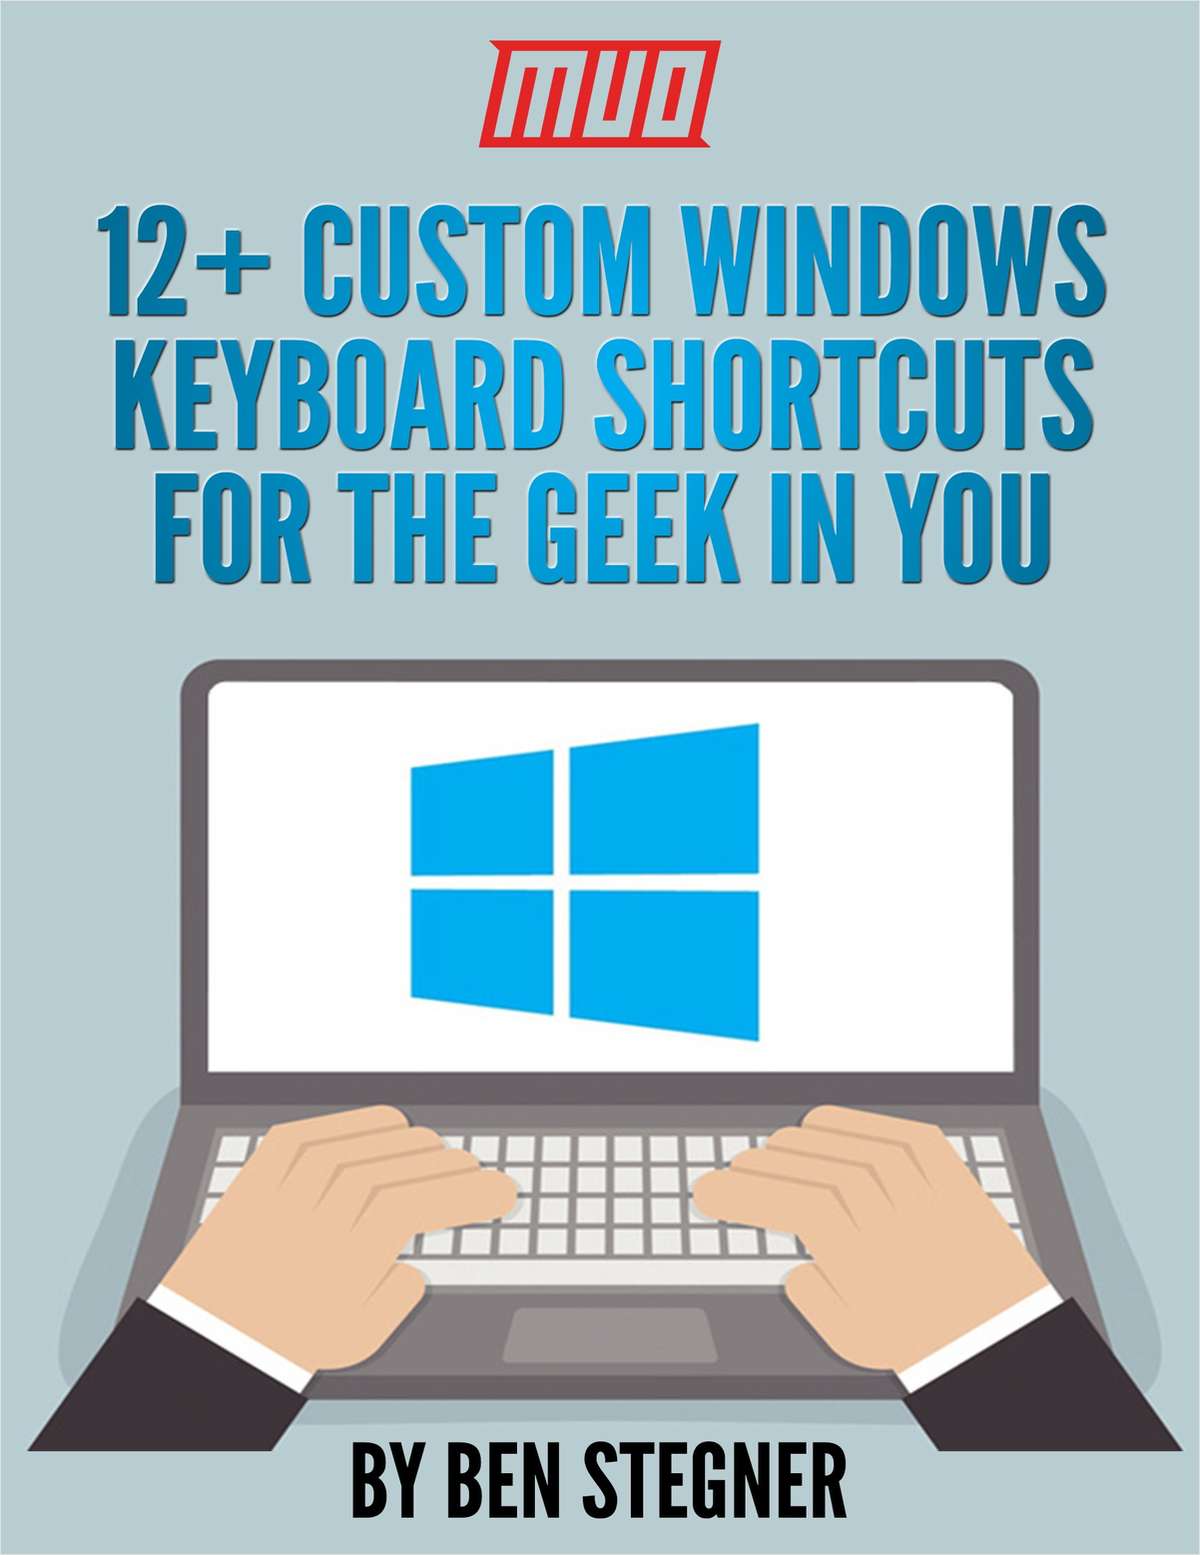 12+ Custom Windows Keyboard Shortcuts for the Geek in You